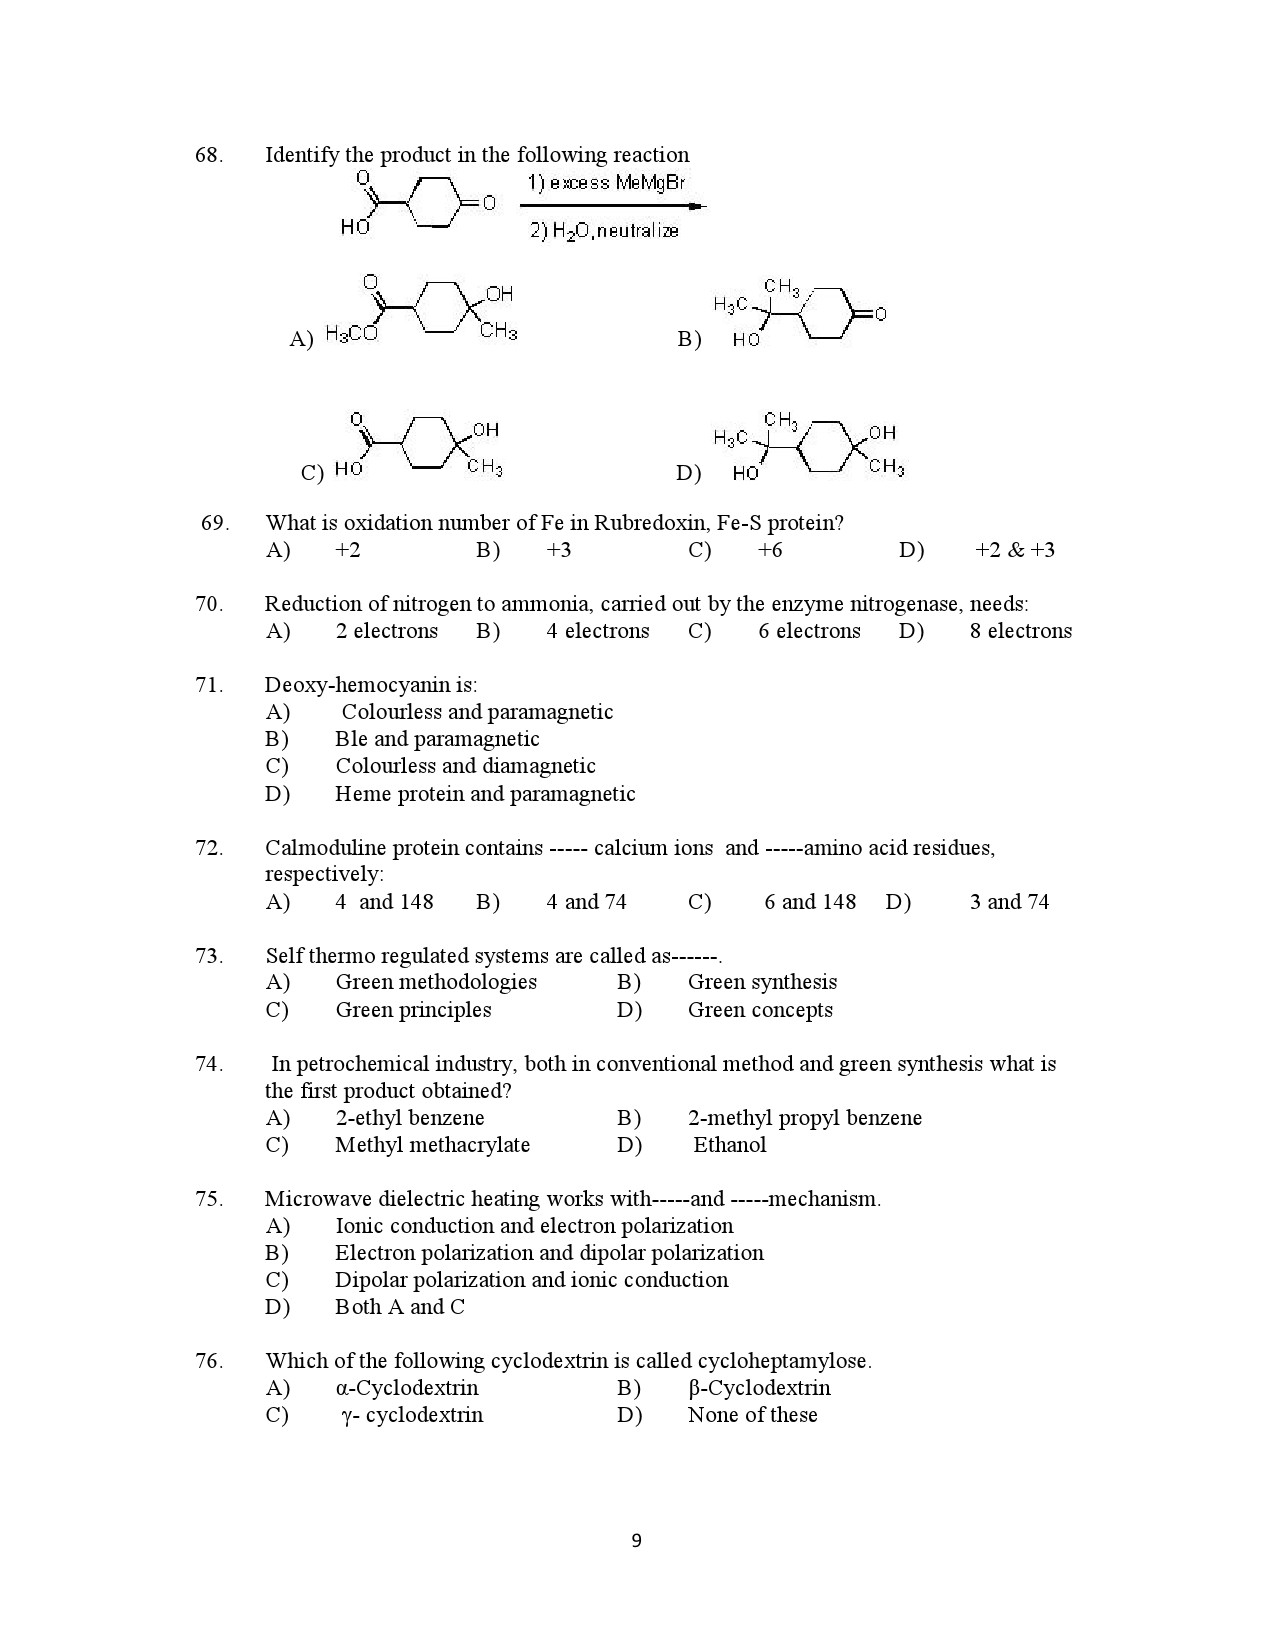 Kerala SET Chemistry Exam Question Paper July 2021 9